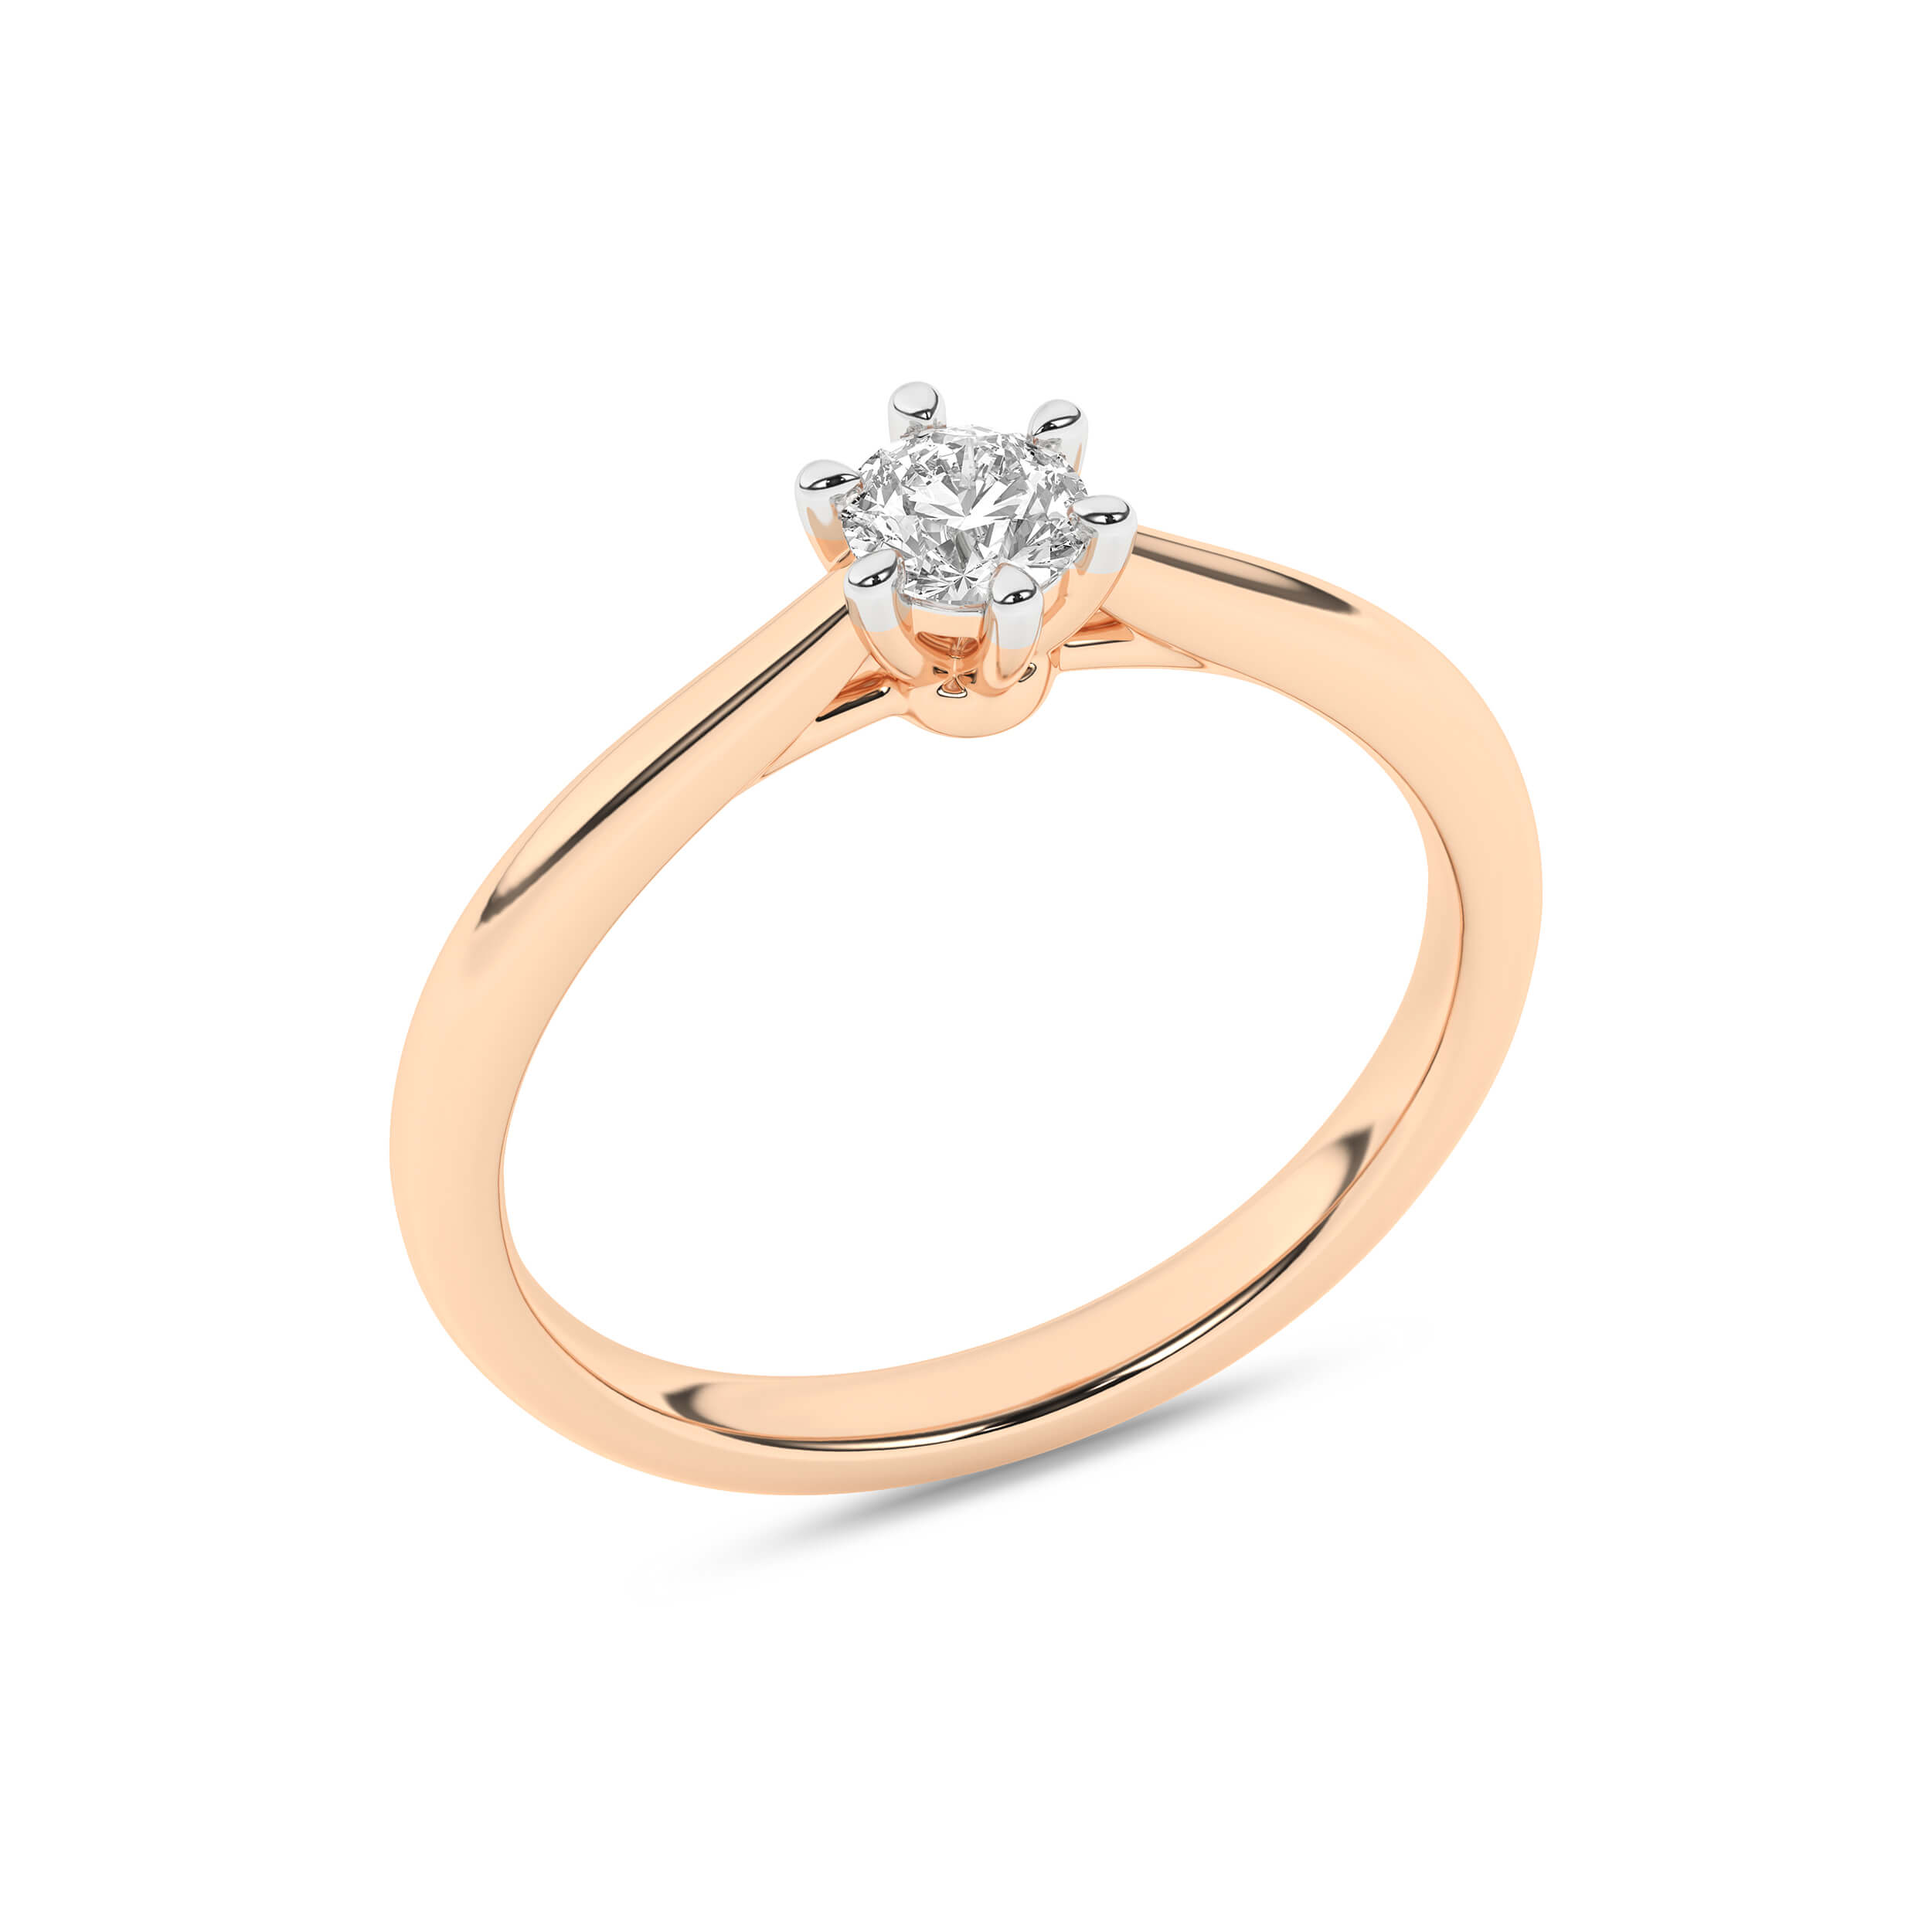 Inel de logodna din Aur Roz 14K cu Diamant 0.25Ct, articol RS1449, previzualizare foto 4